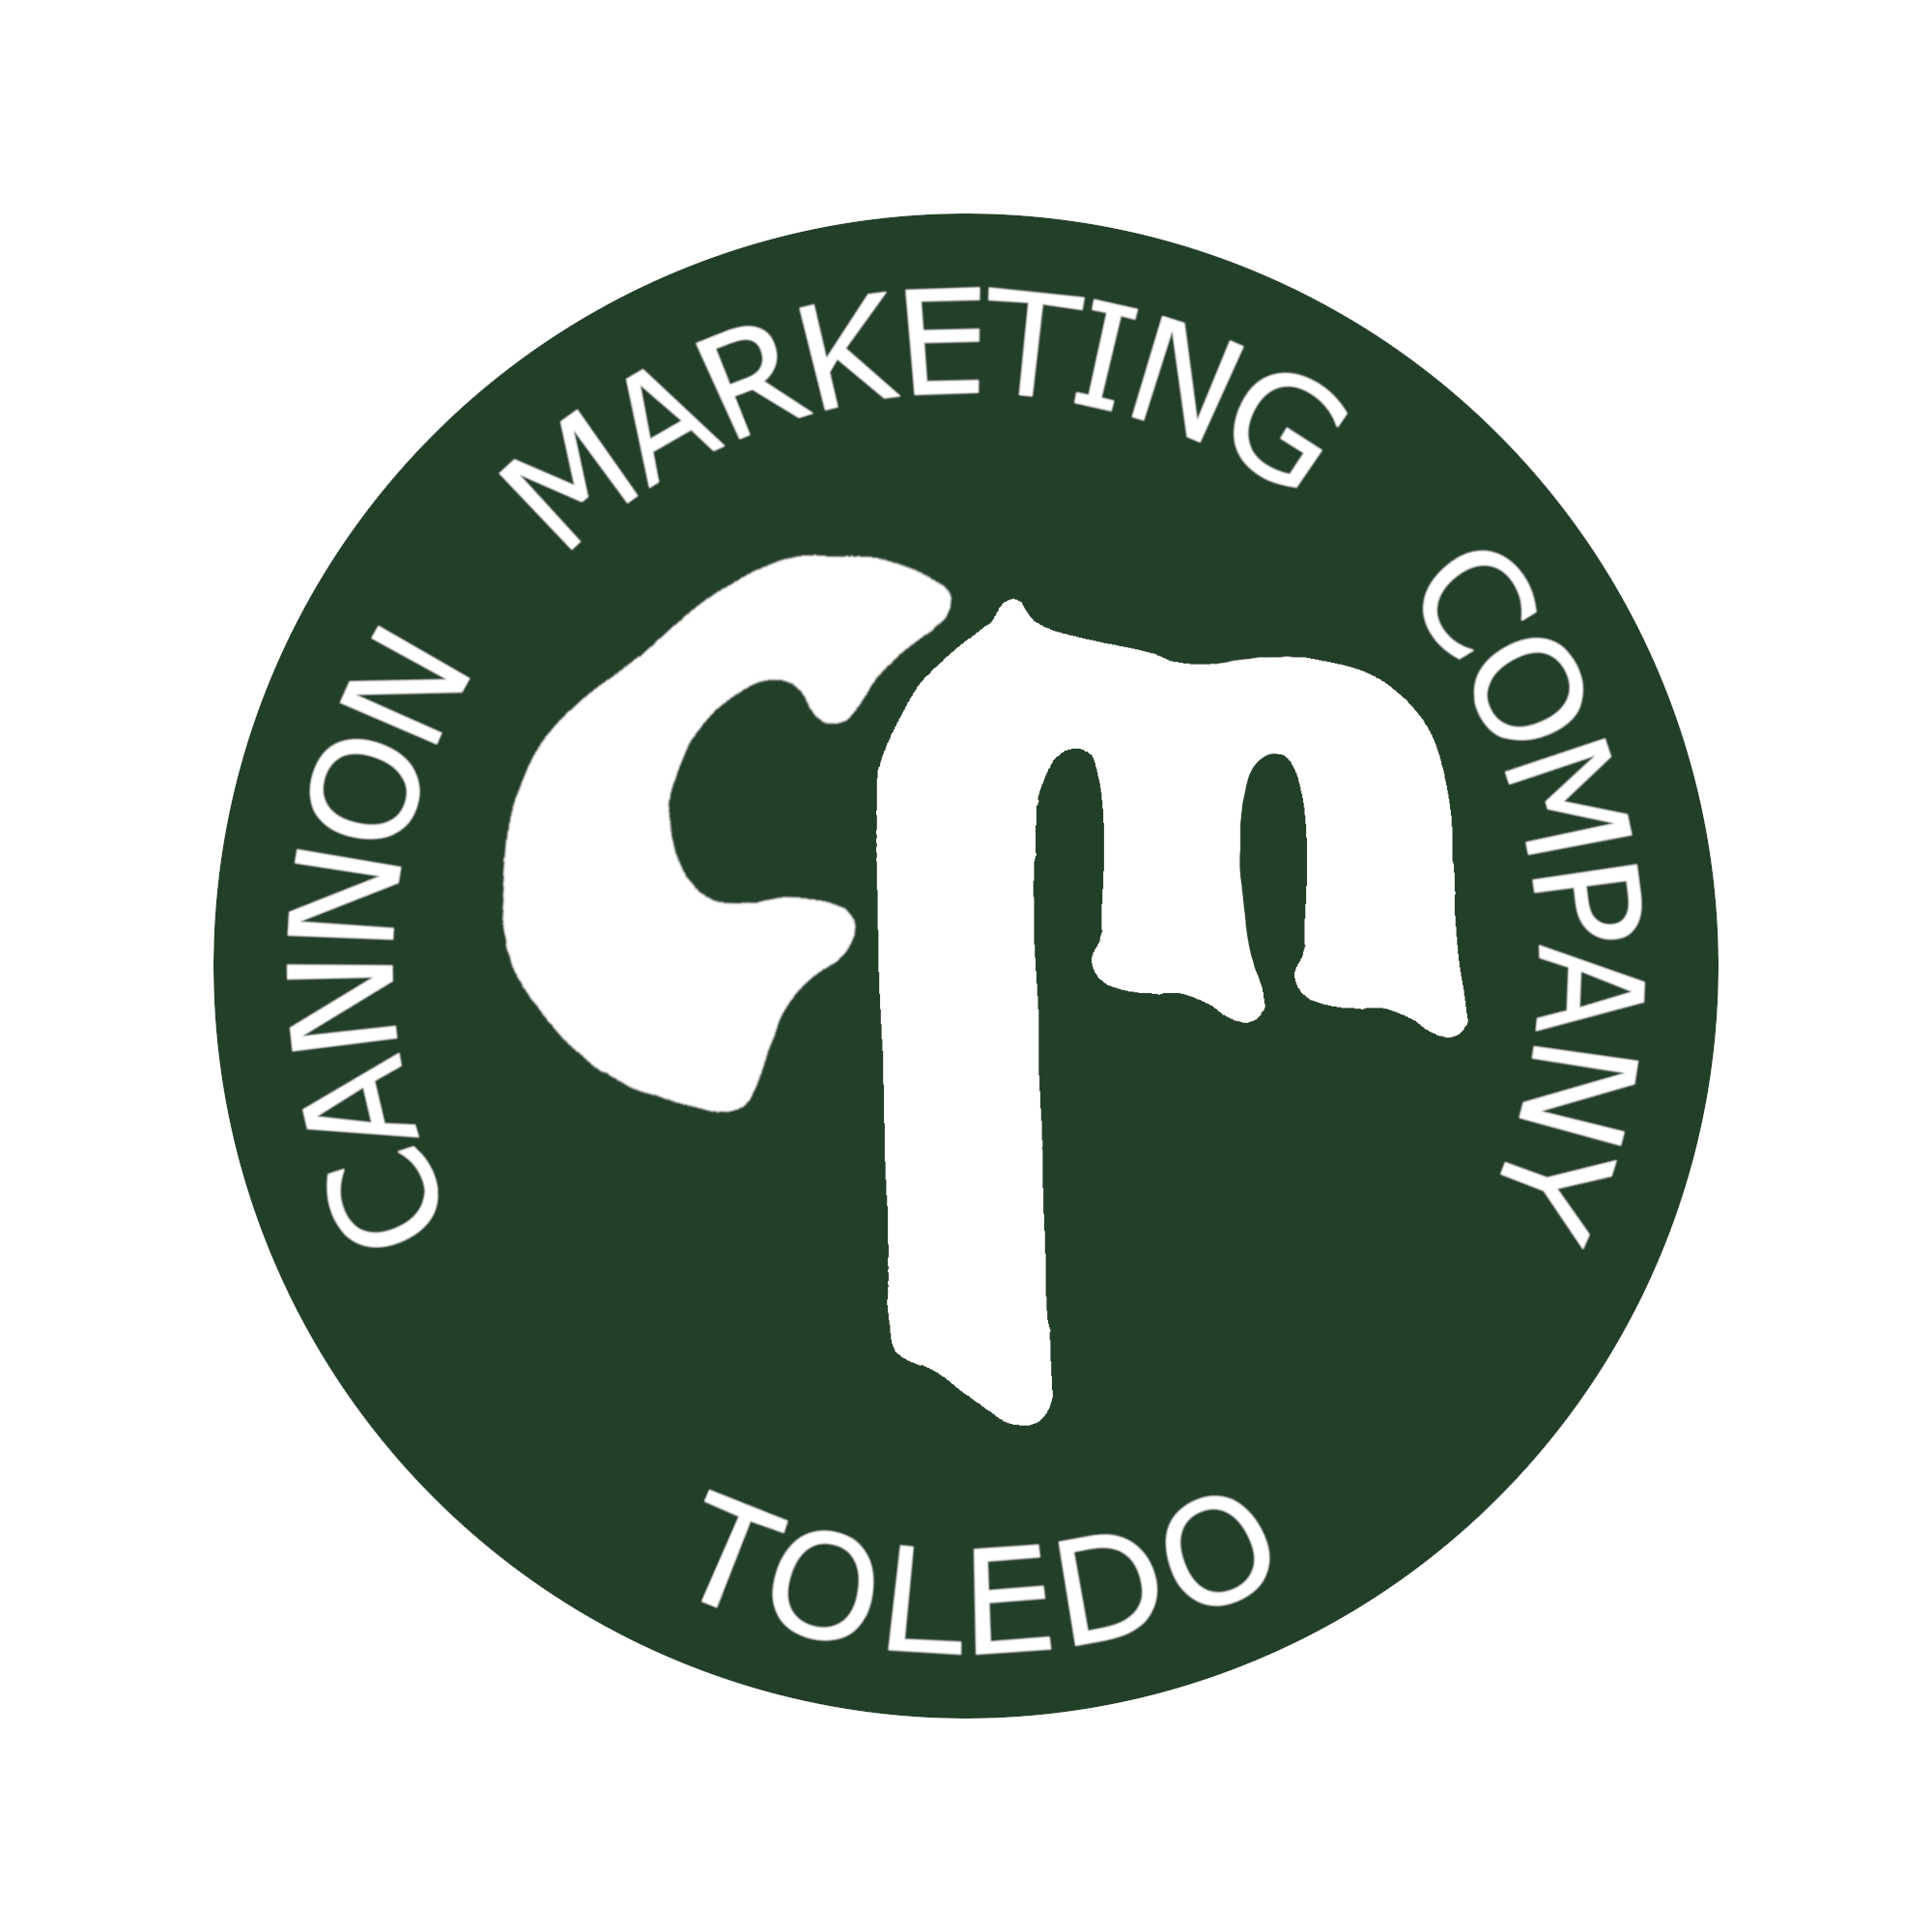 Cannon Marketing logo